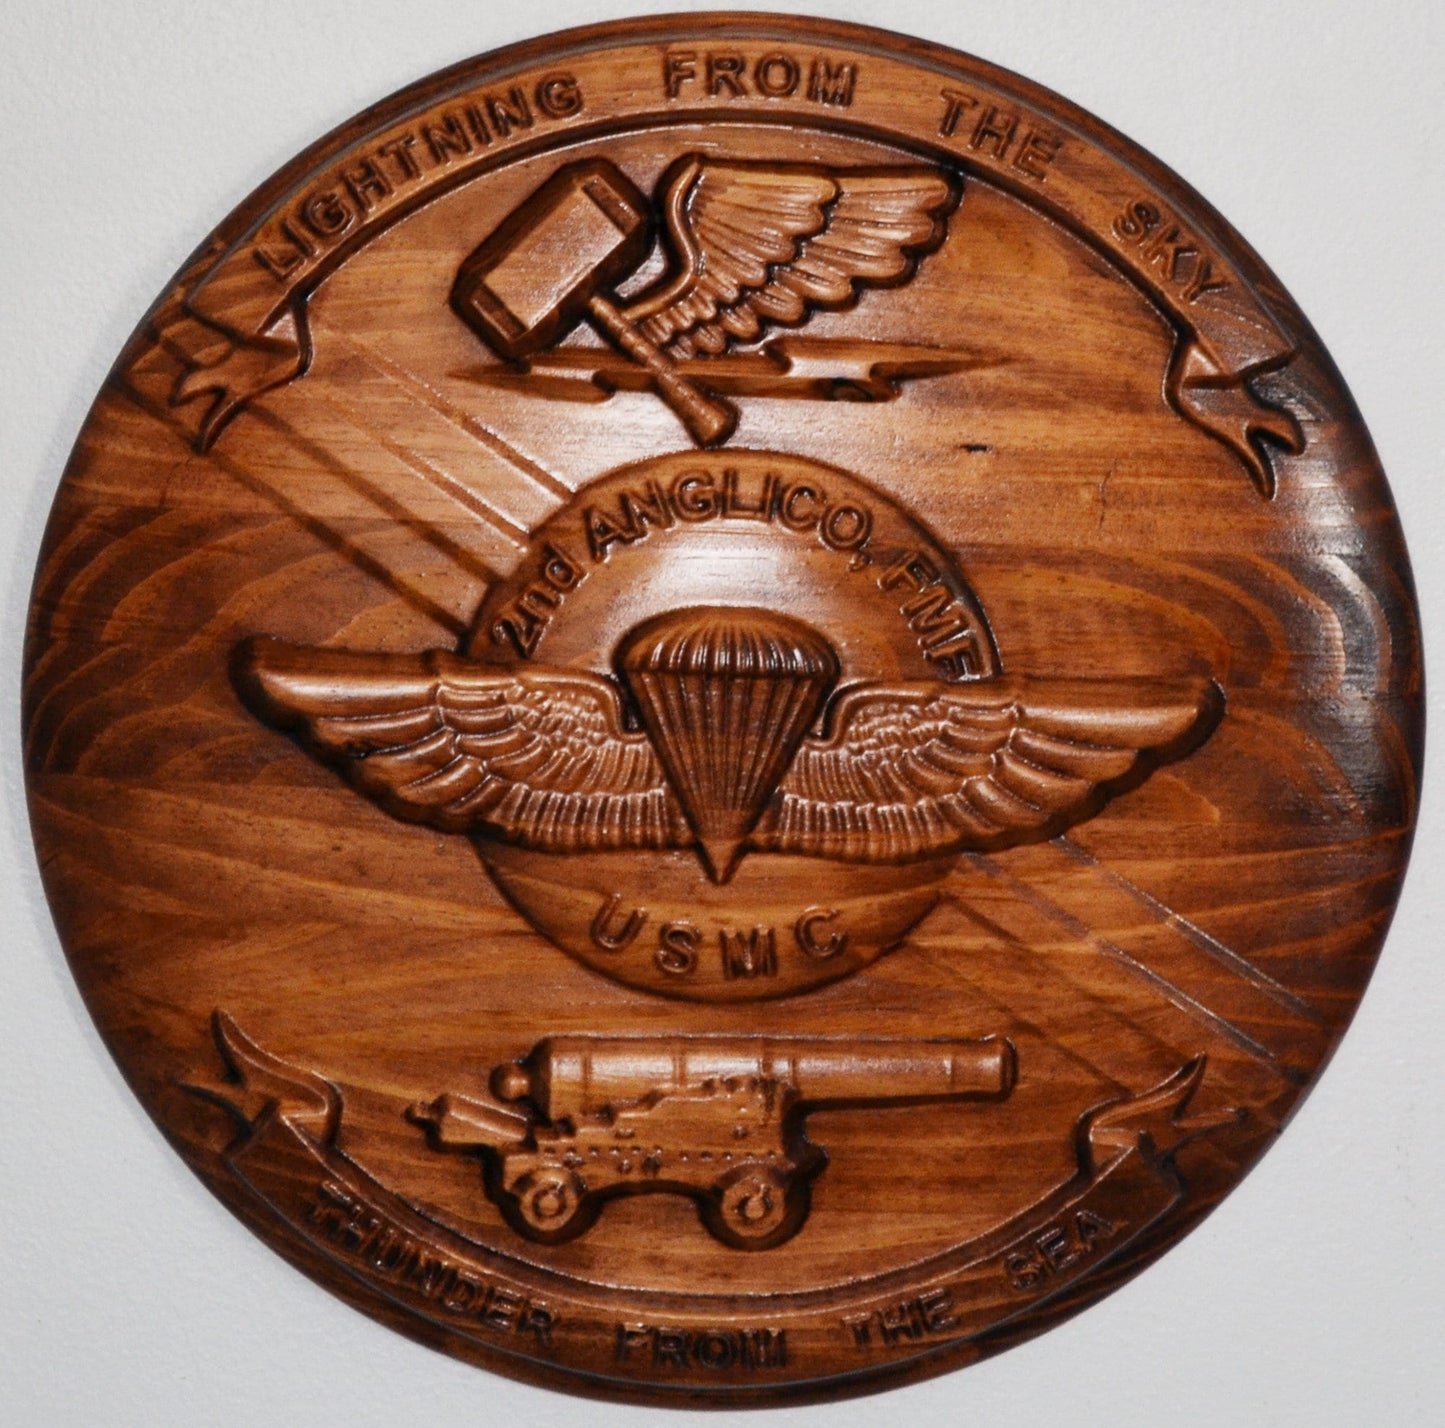 USMC 2nd Anglico, Unit Emblem, US Marine Corps, military plaque